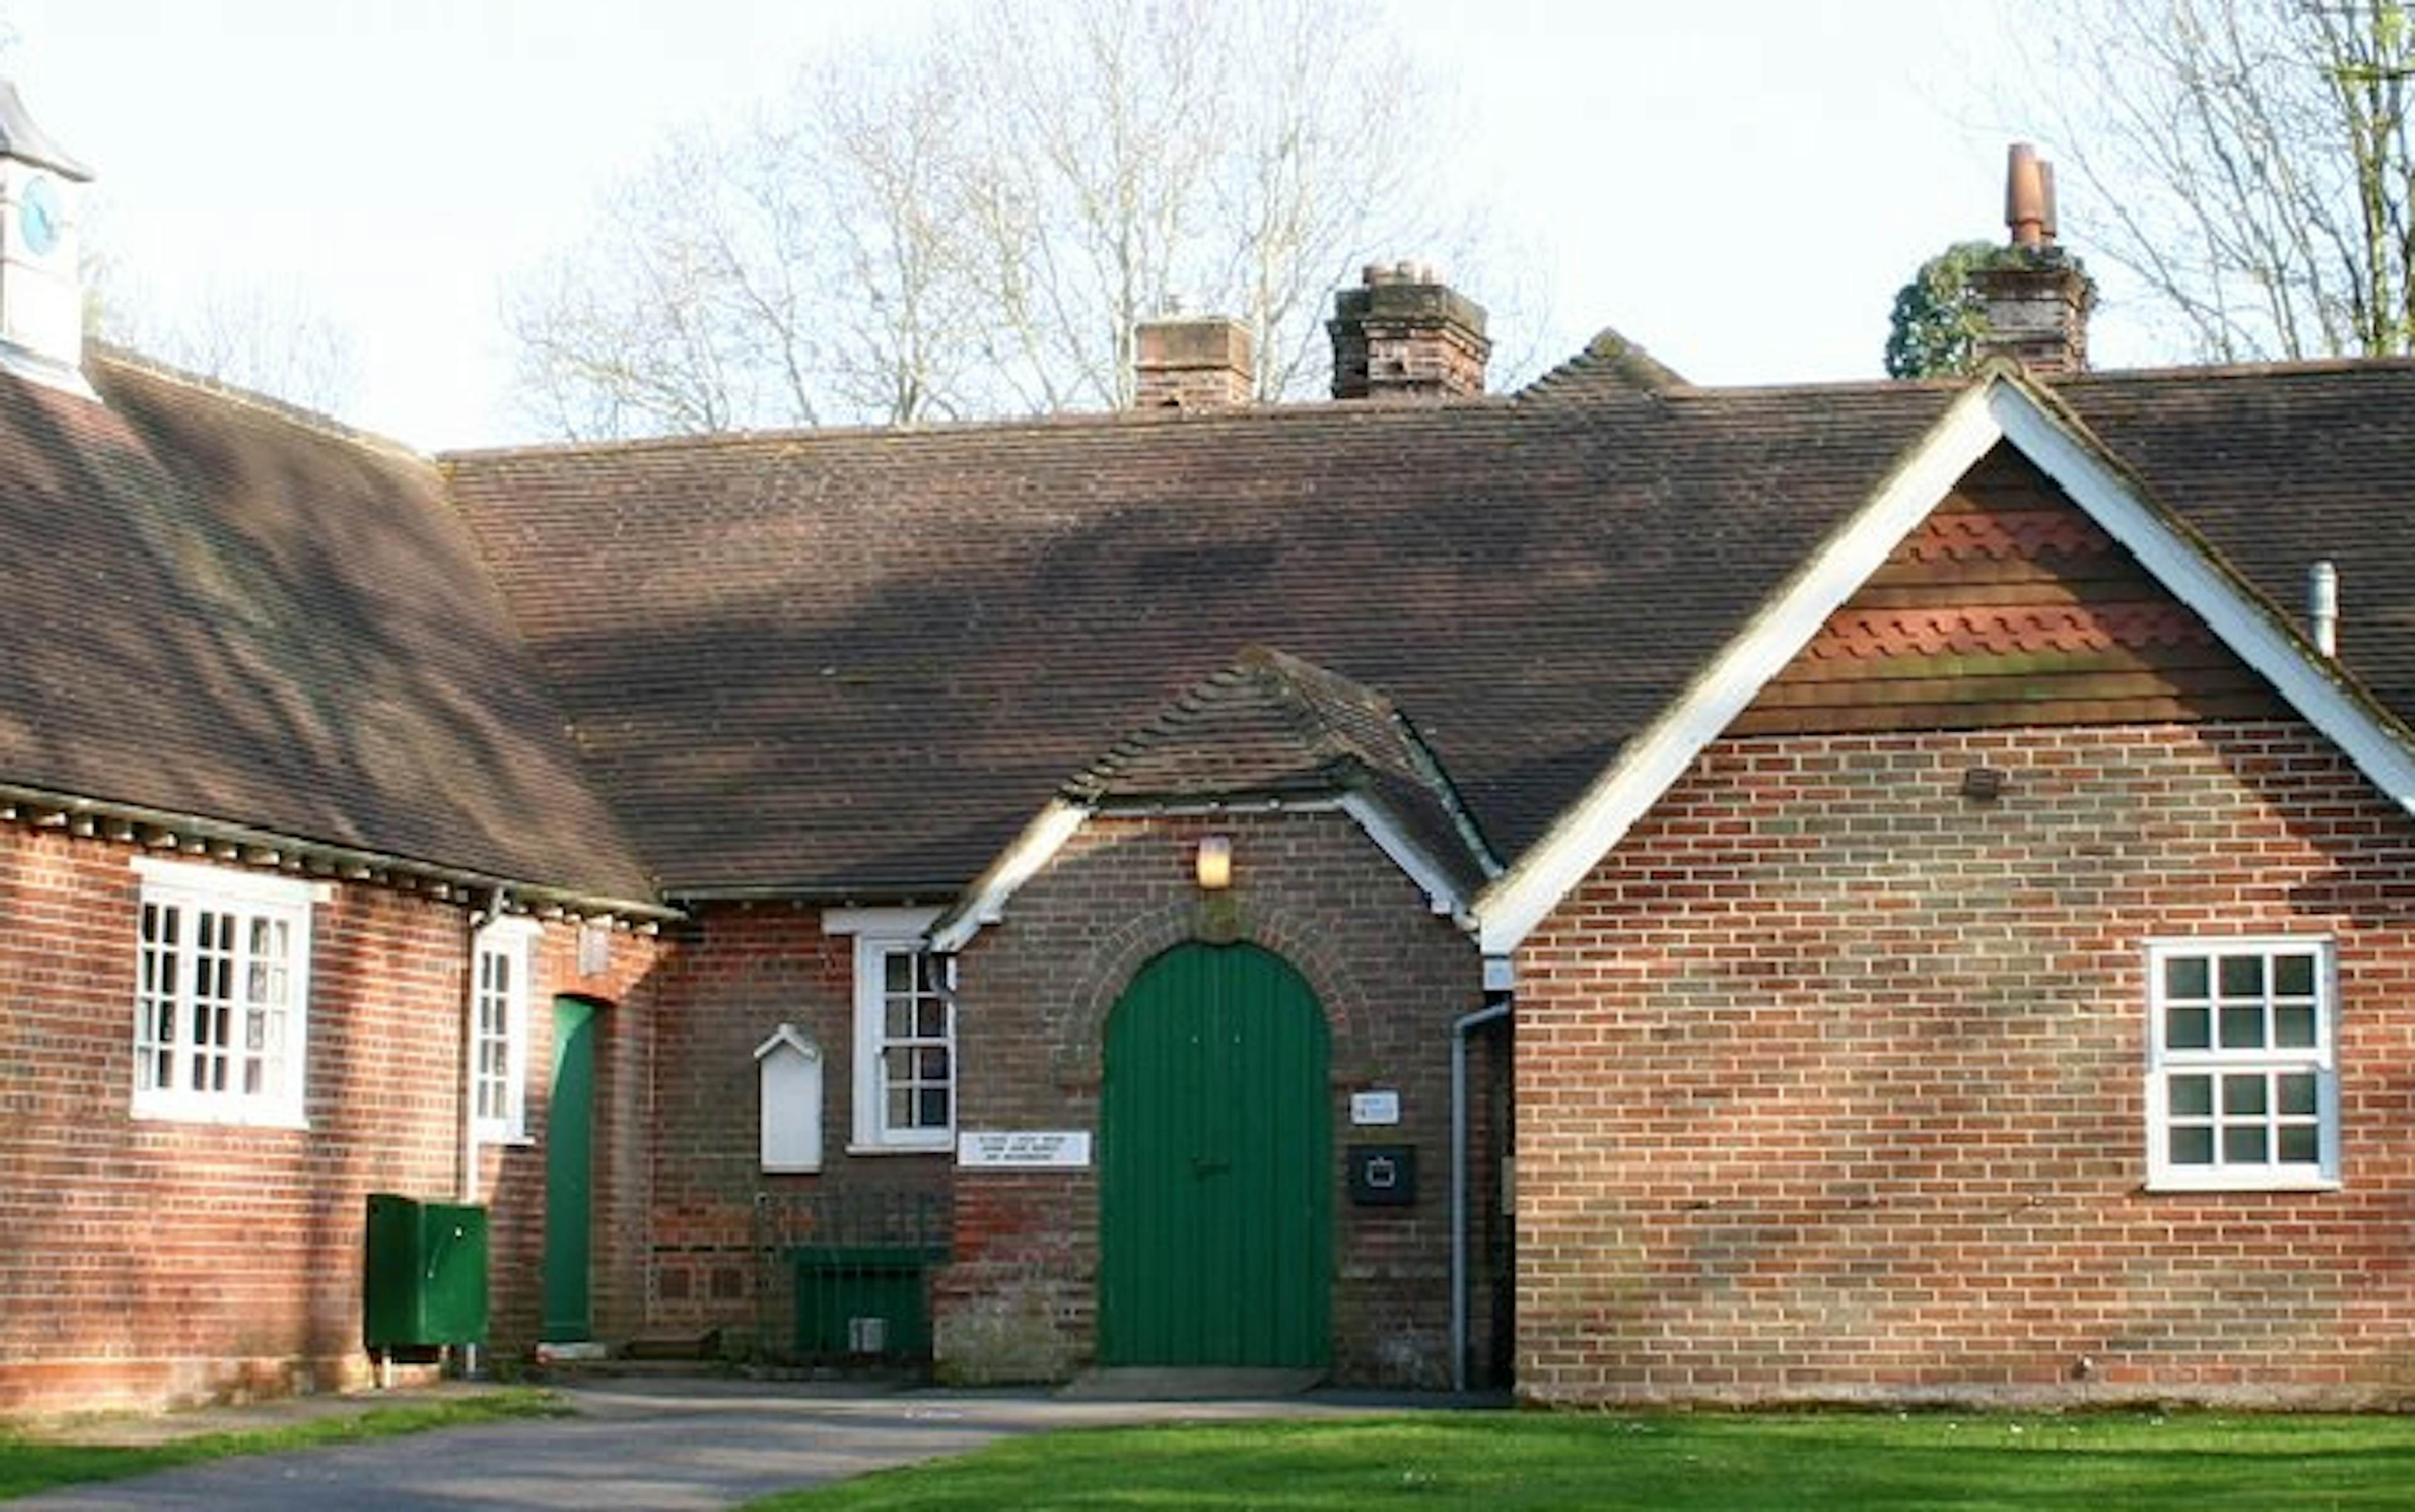 Curdridge Reading Room & Recreational Ground - Main Hall image 1